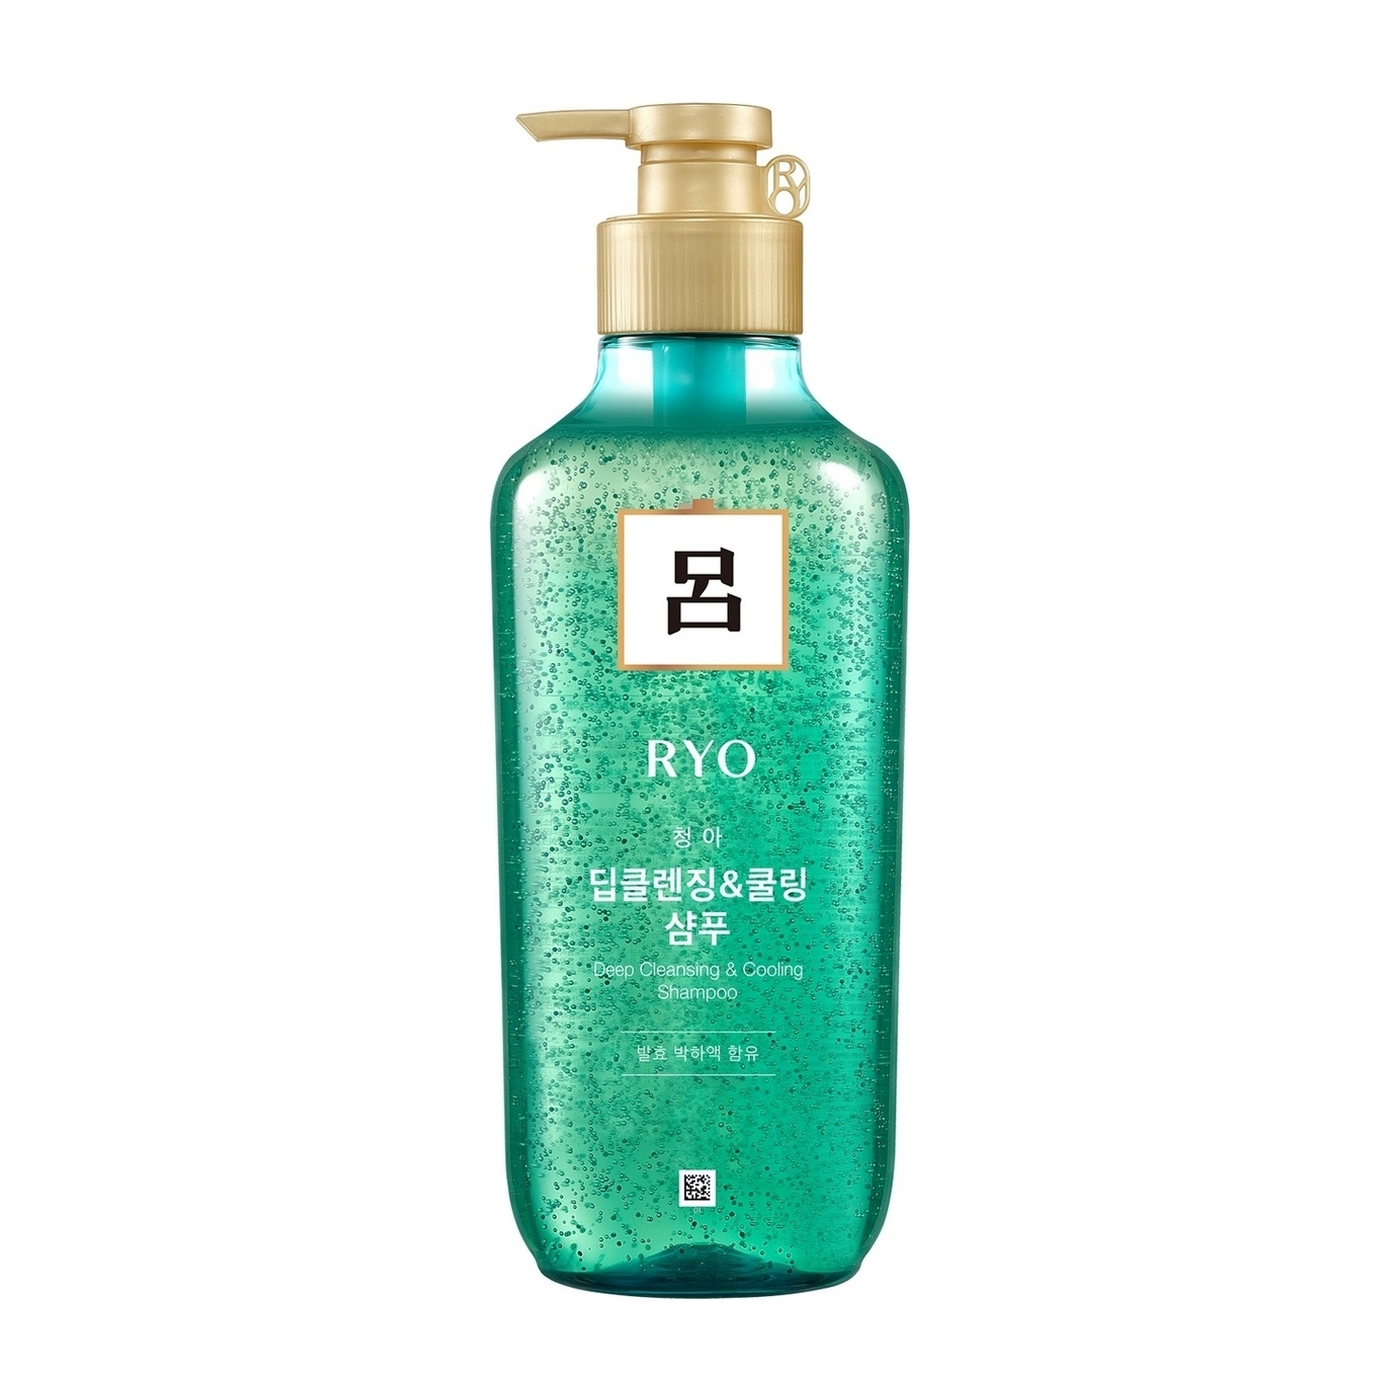 Deep cleansing shampoo